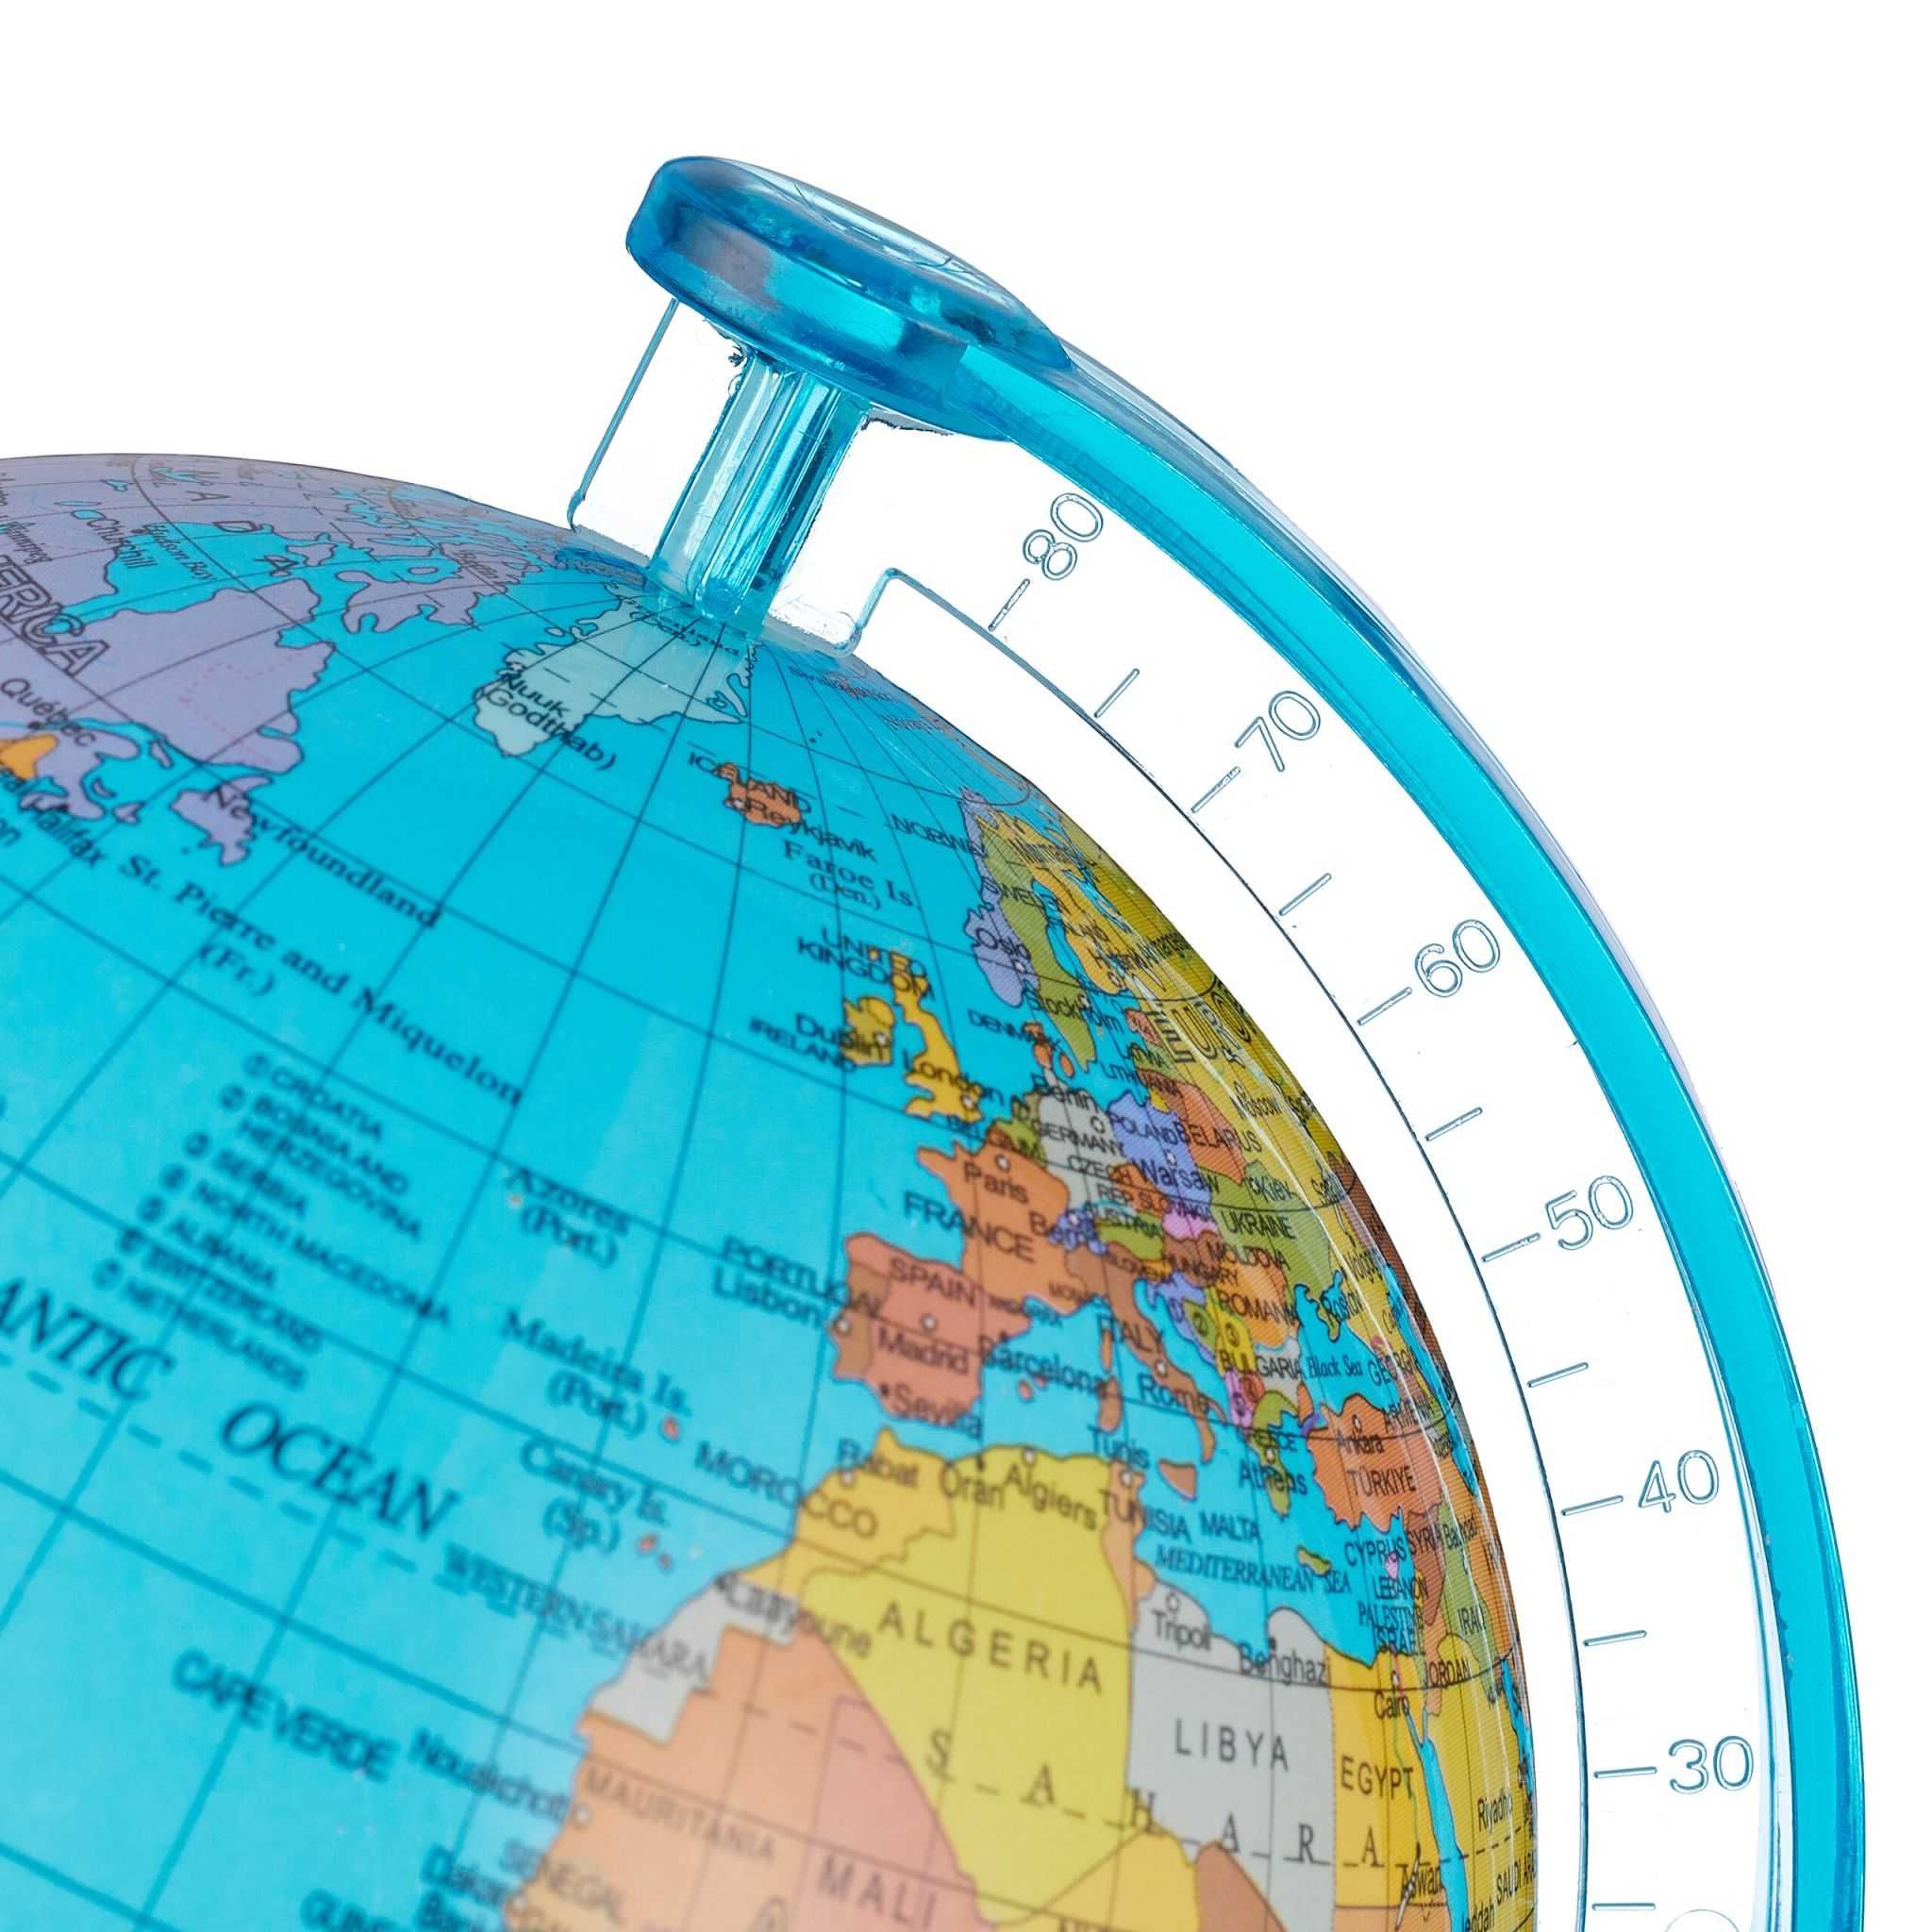 Pusculita glob pamantesc harta politica a lumii, engleza, 16,5x14x14cm